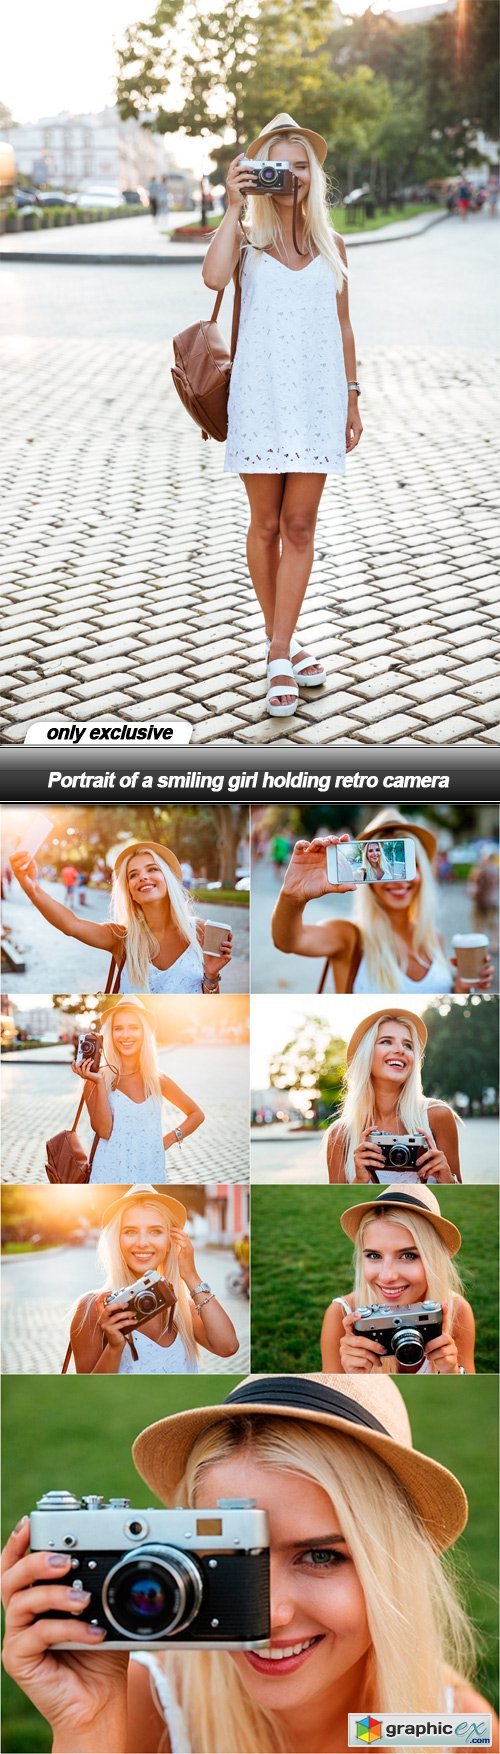 Portrait of a smiling girl holding retro camera - 8 UHQ JPEG